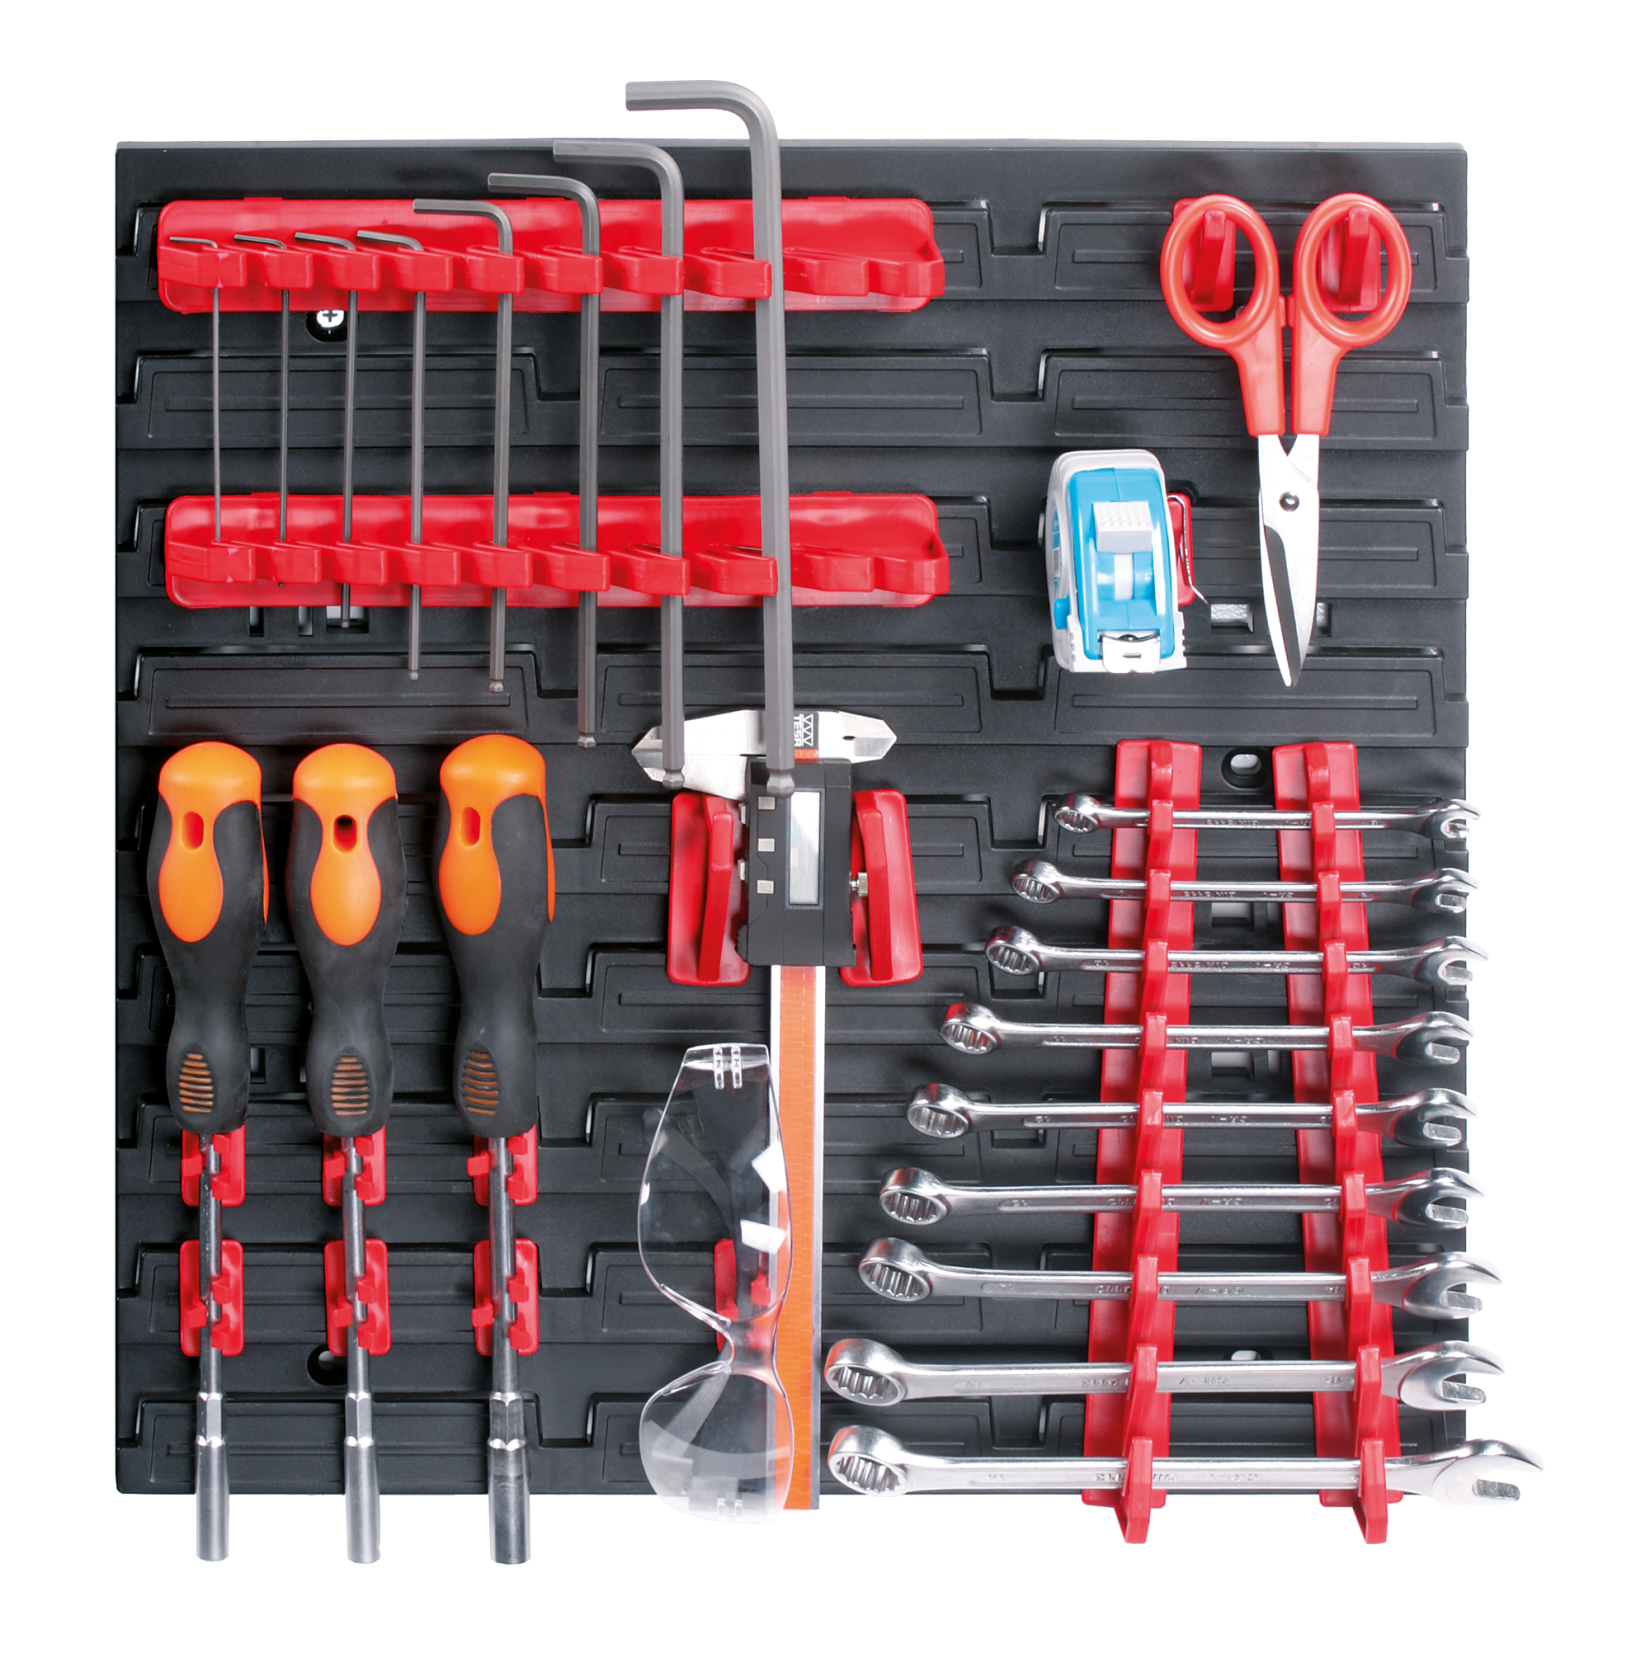 Bineer hooks & shelves - tool board accessories